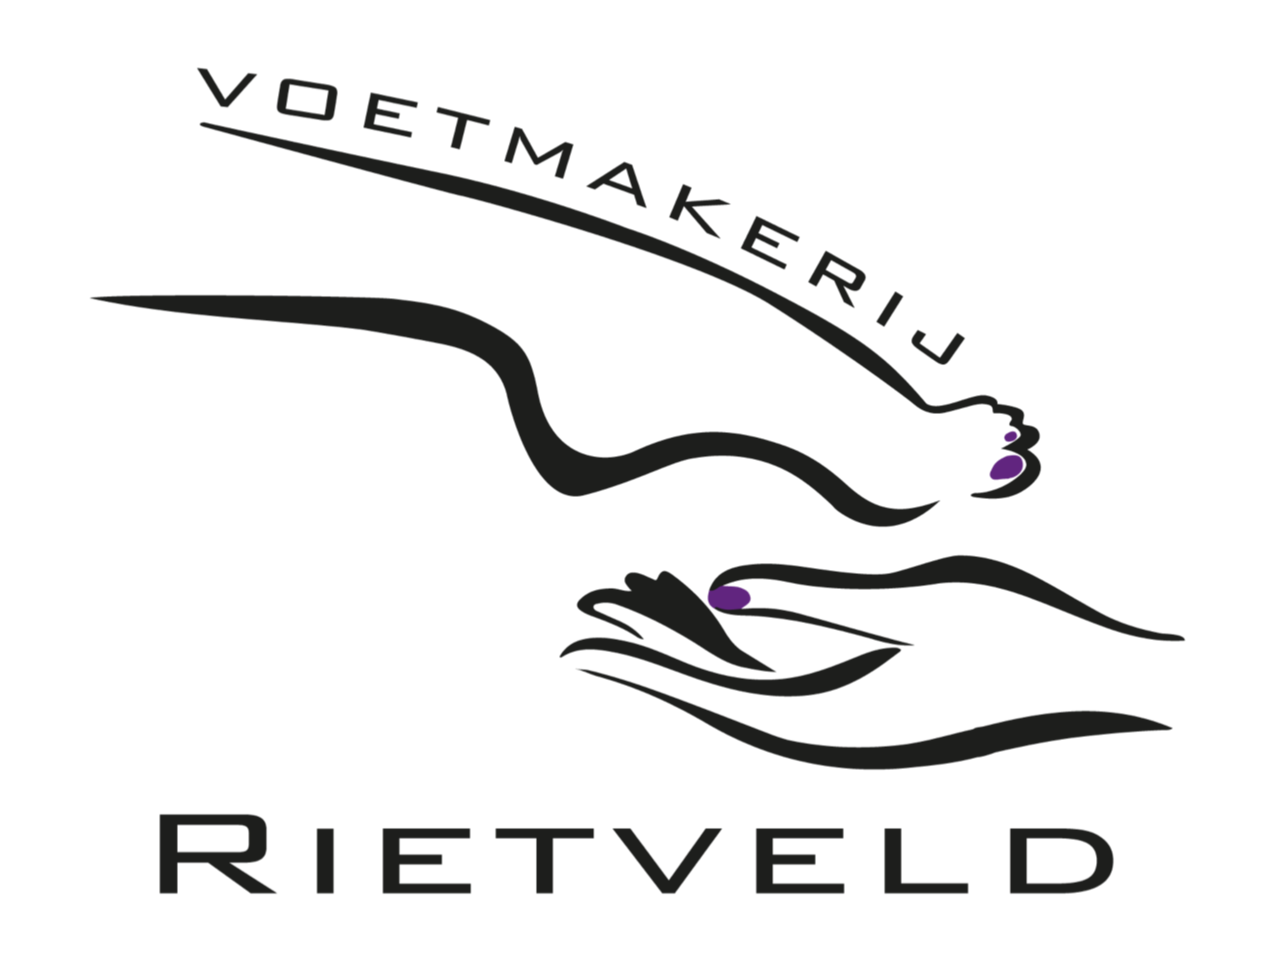 20170916-logo-rietveld-voetmakerij